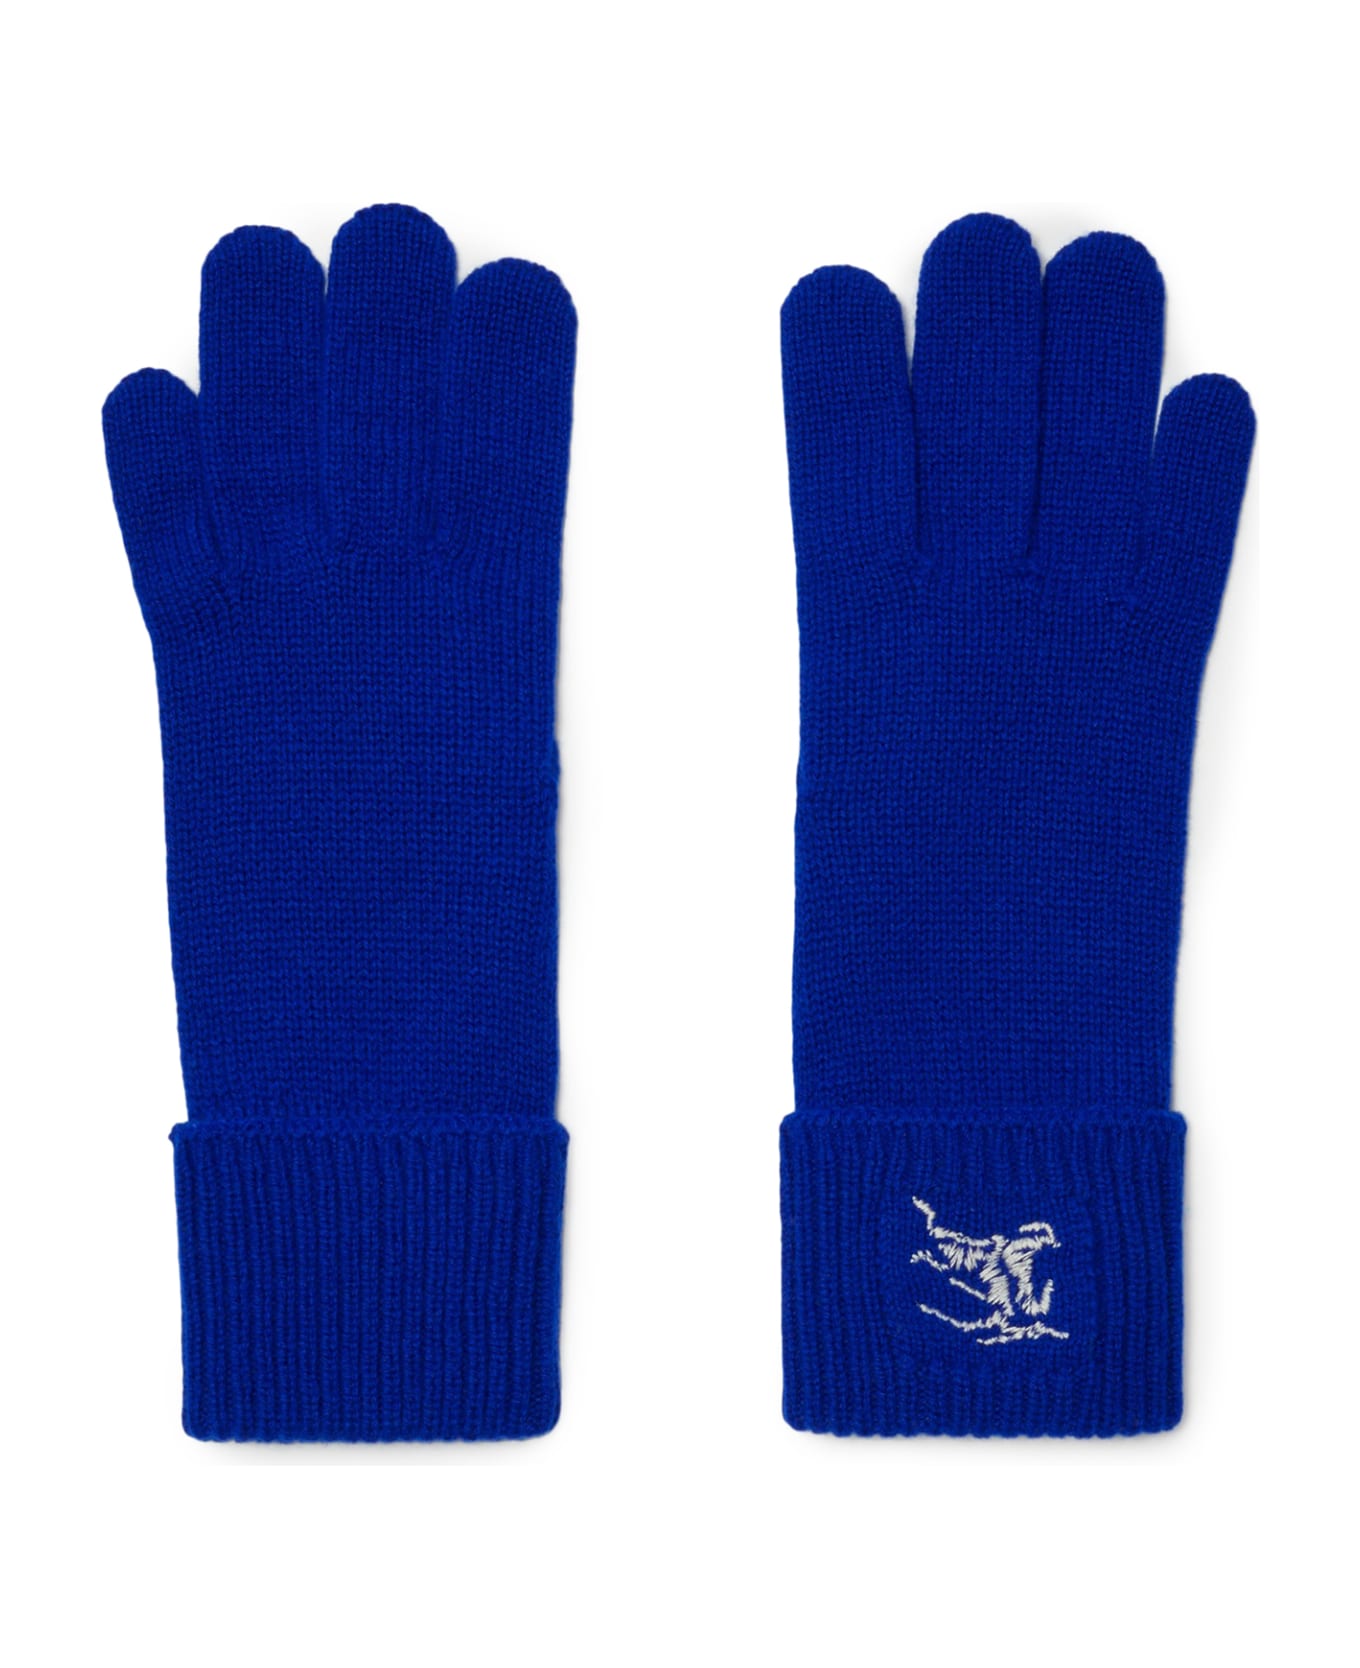 Burberry Lg Ekd Cashmere Gloves - Knight